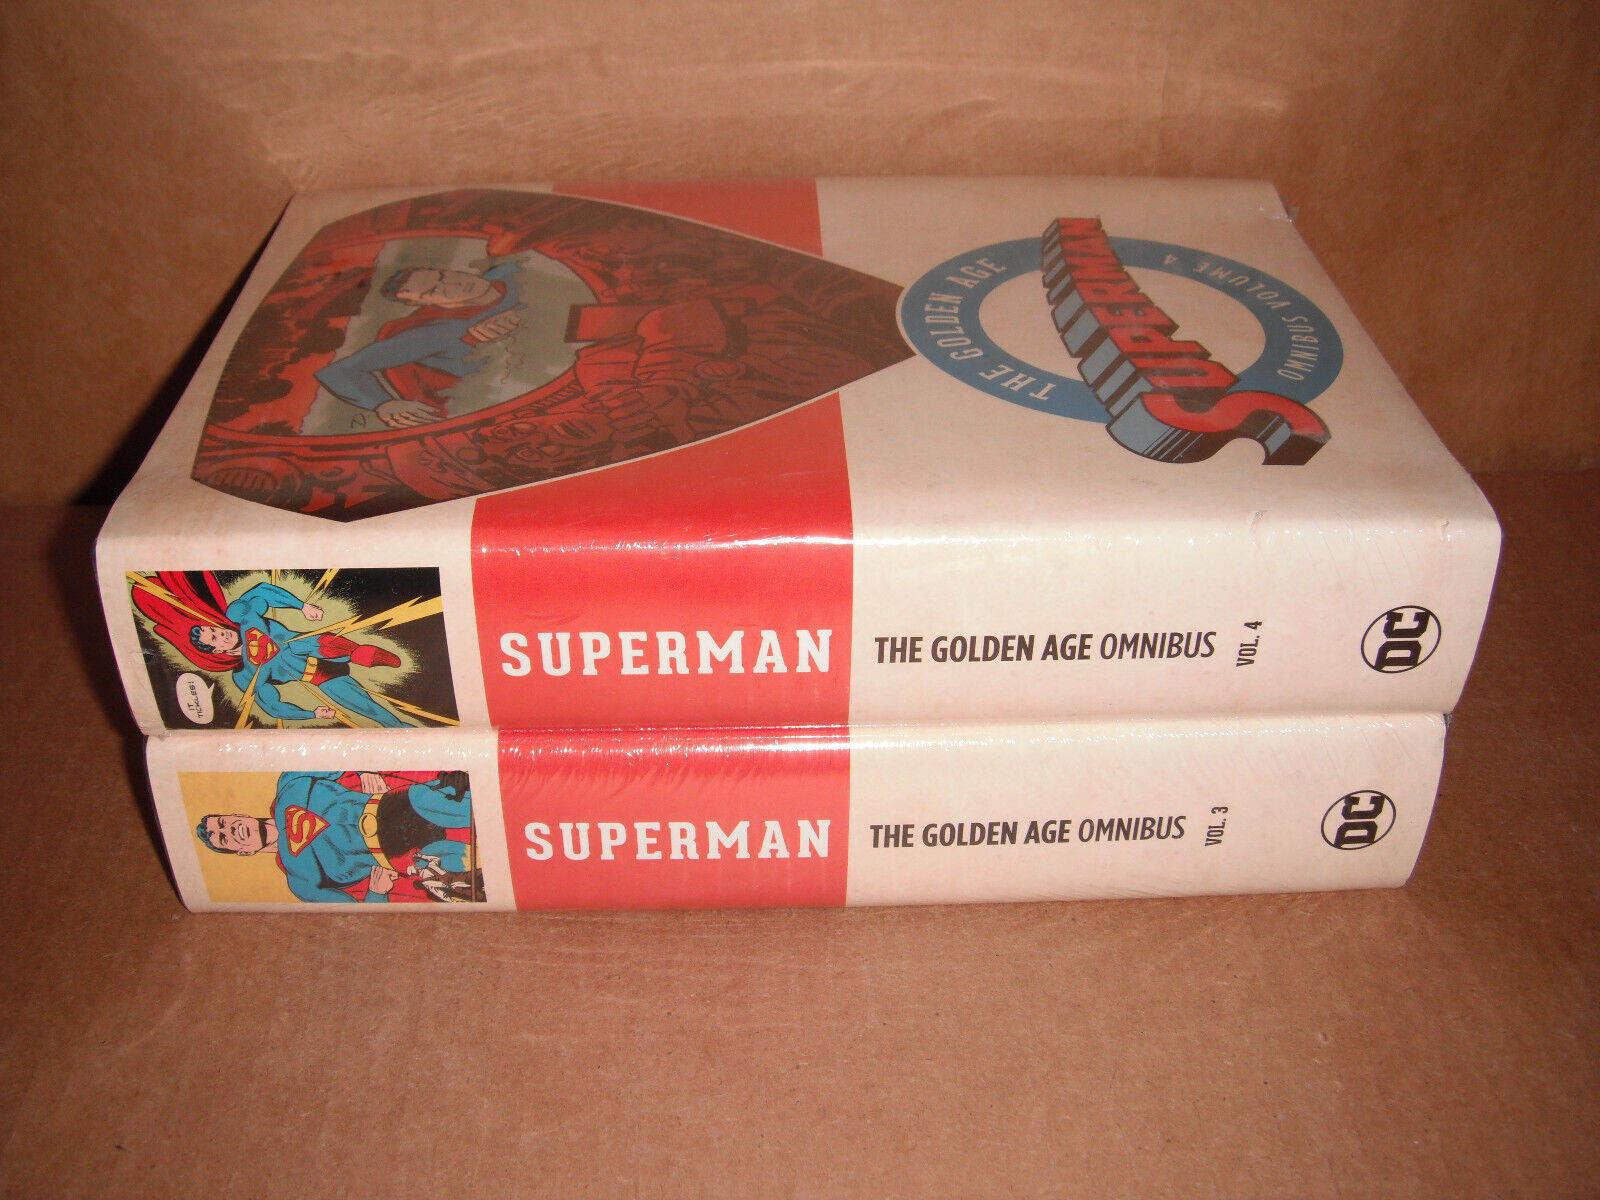 Superman: The Golden Age Omnibus Vol. 3,4 Hardcover